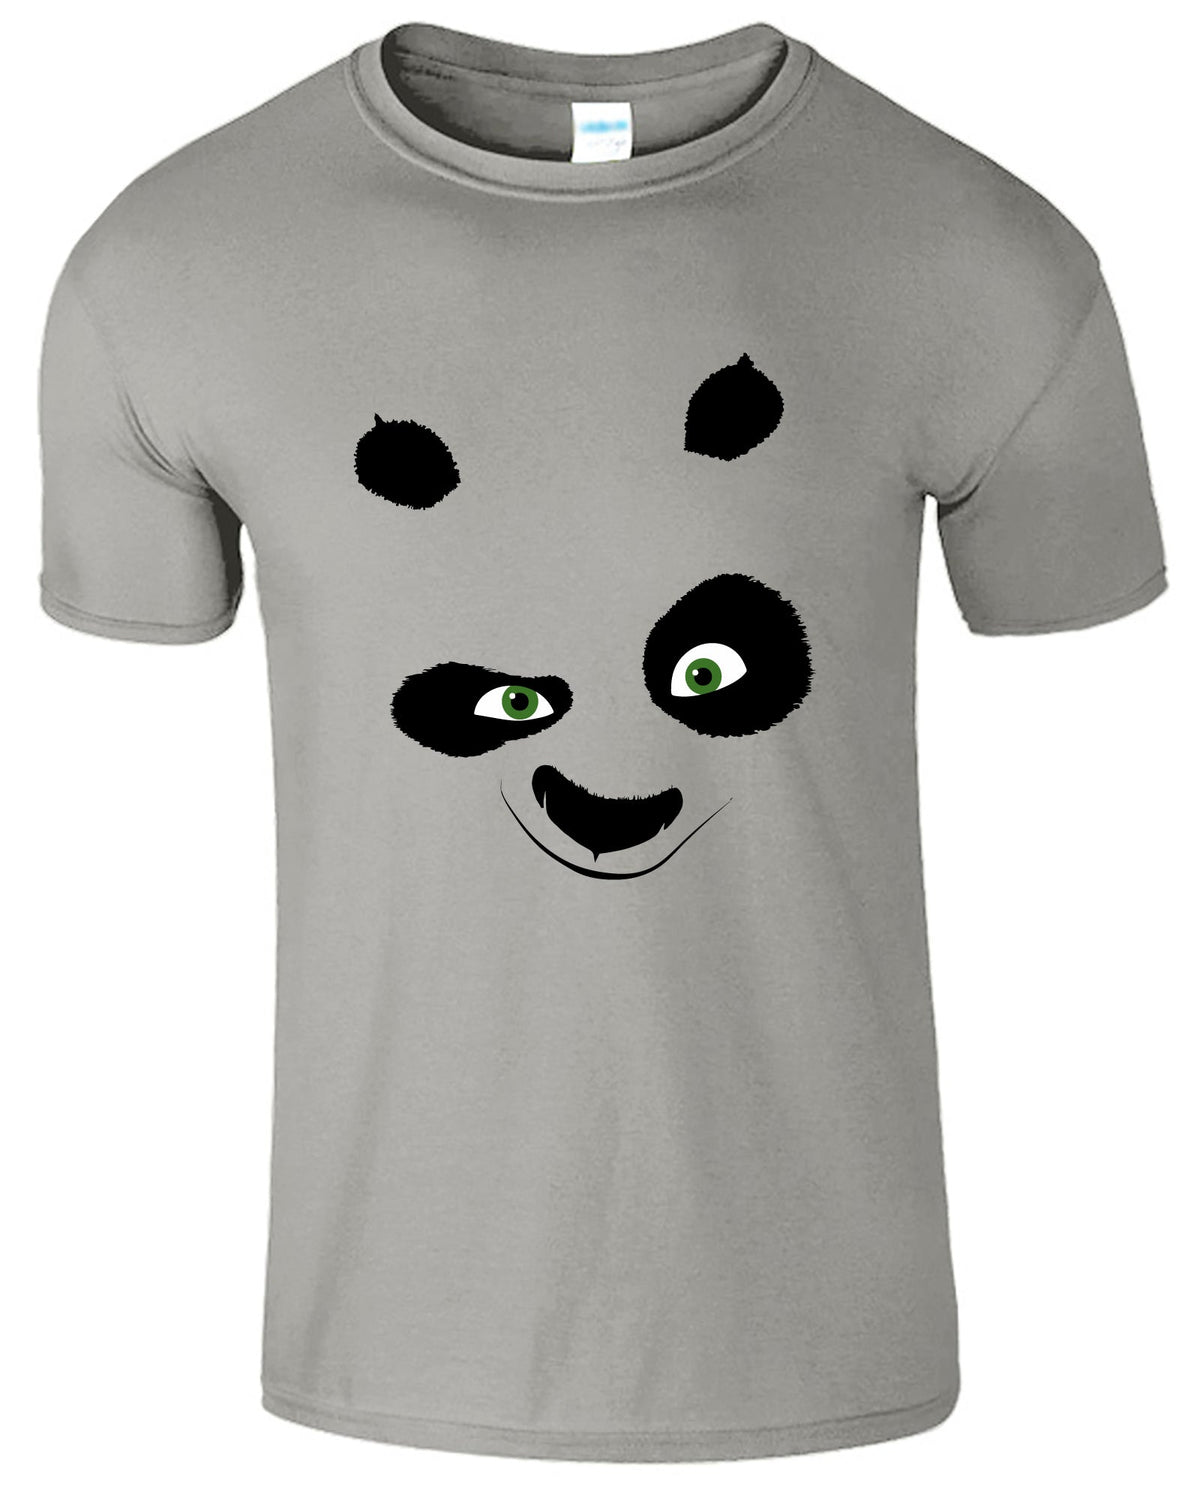 Panda Face Men's T-Shirt